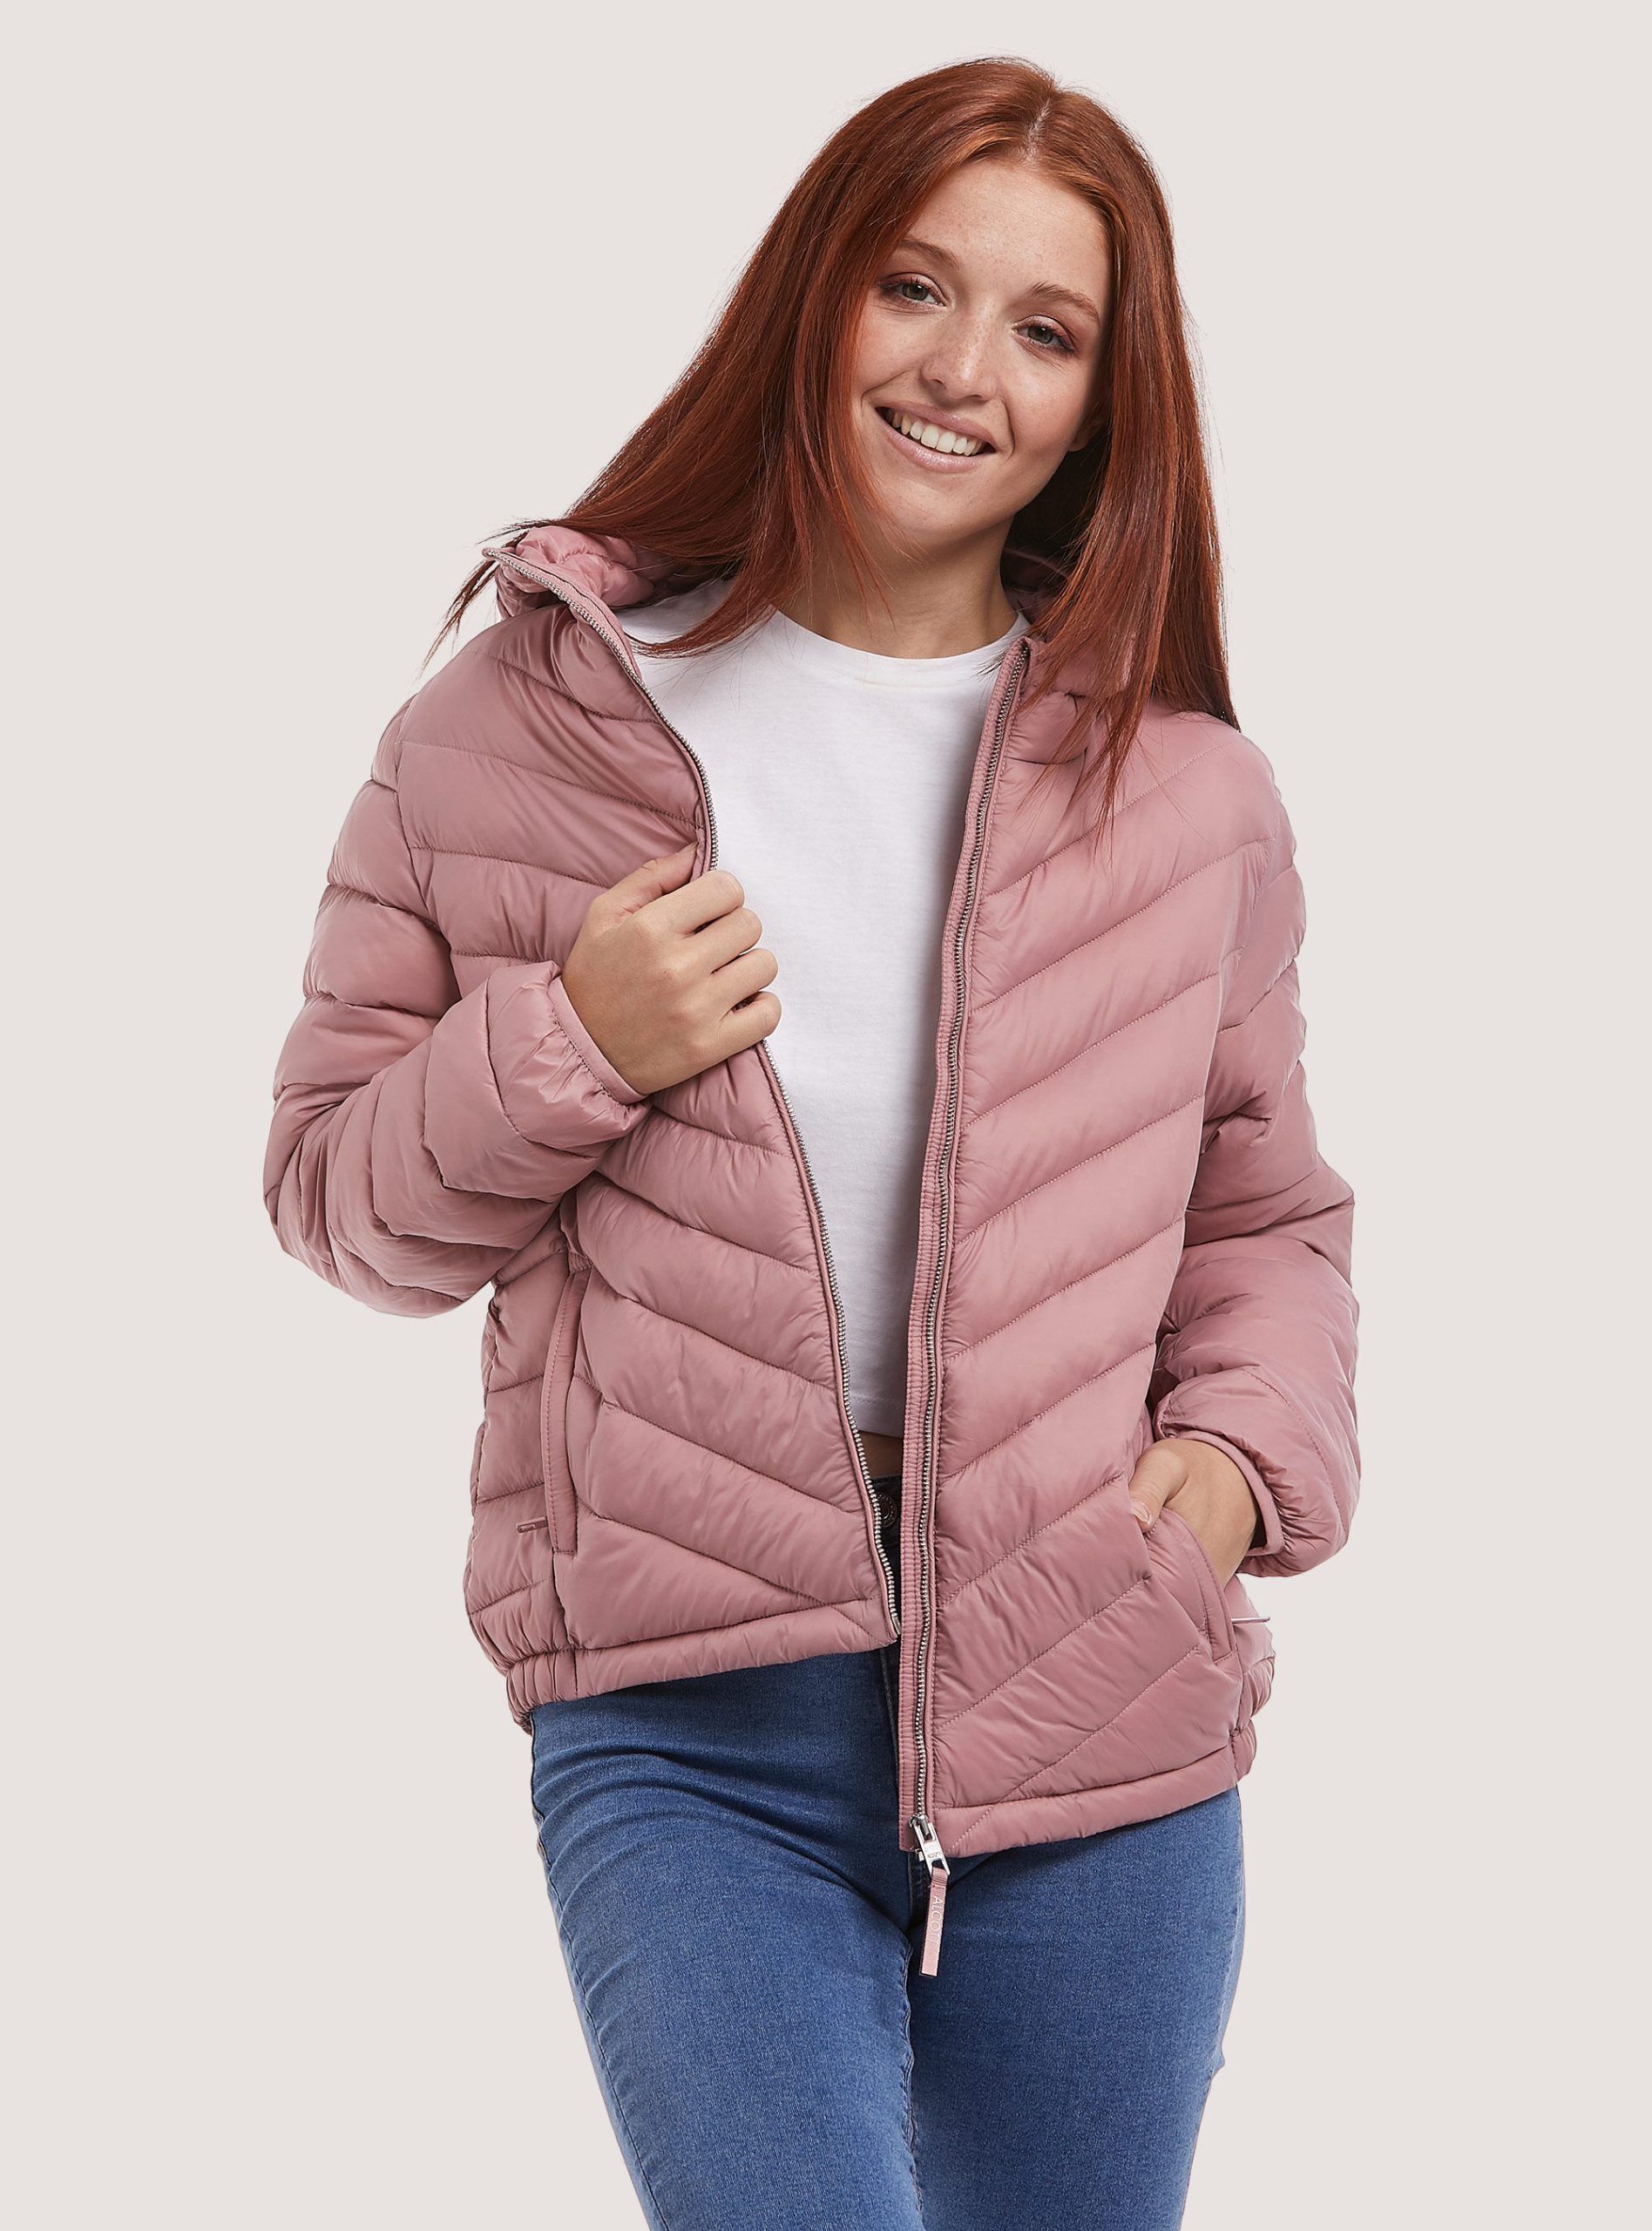 Mäntel Und Jacken Pk2 Pink Medium Frauen Jacket With Recycled Padding Material Alcott – 1